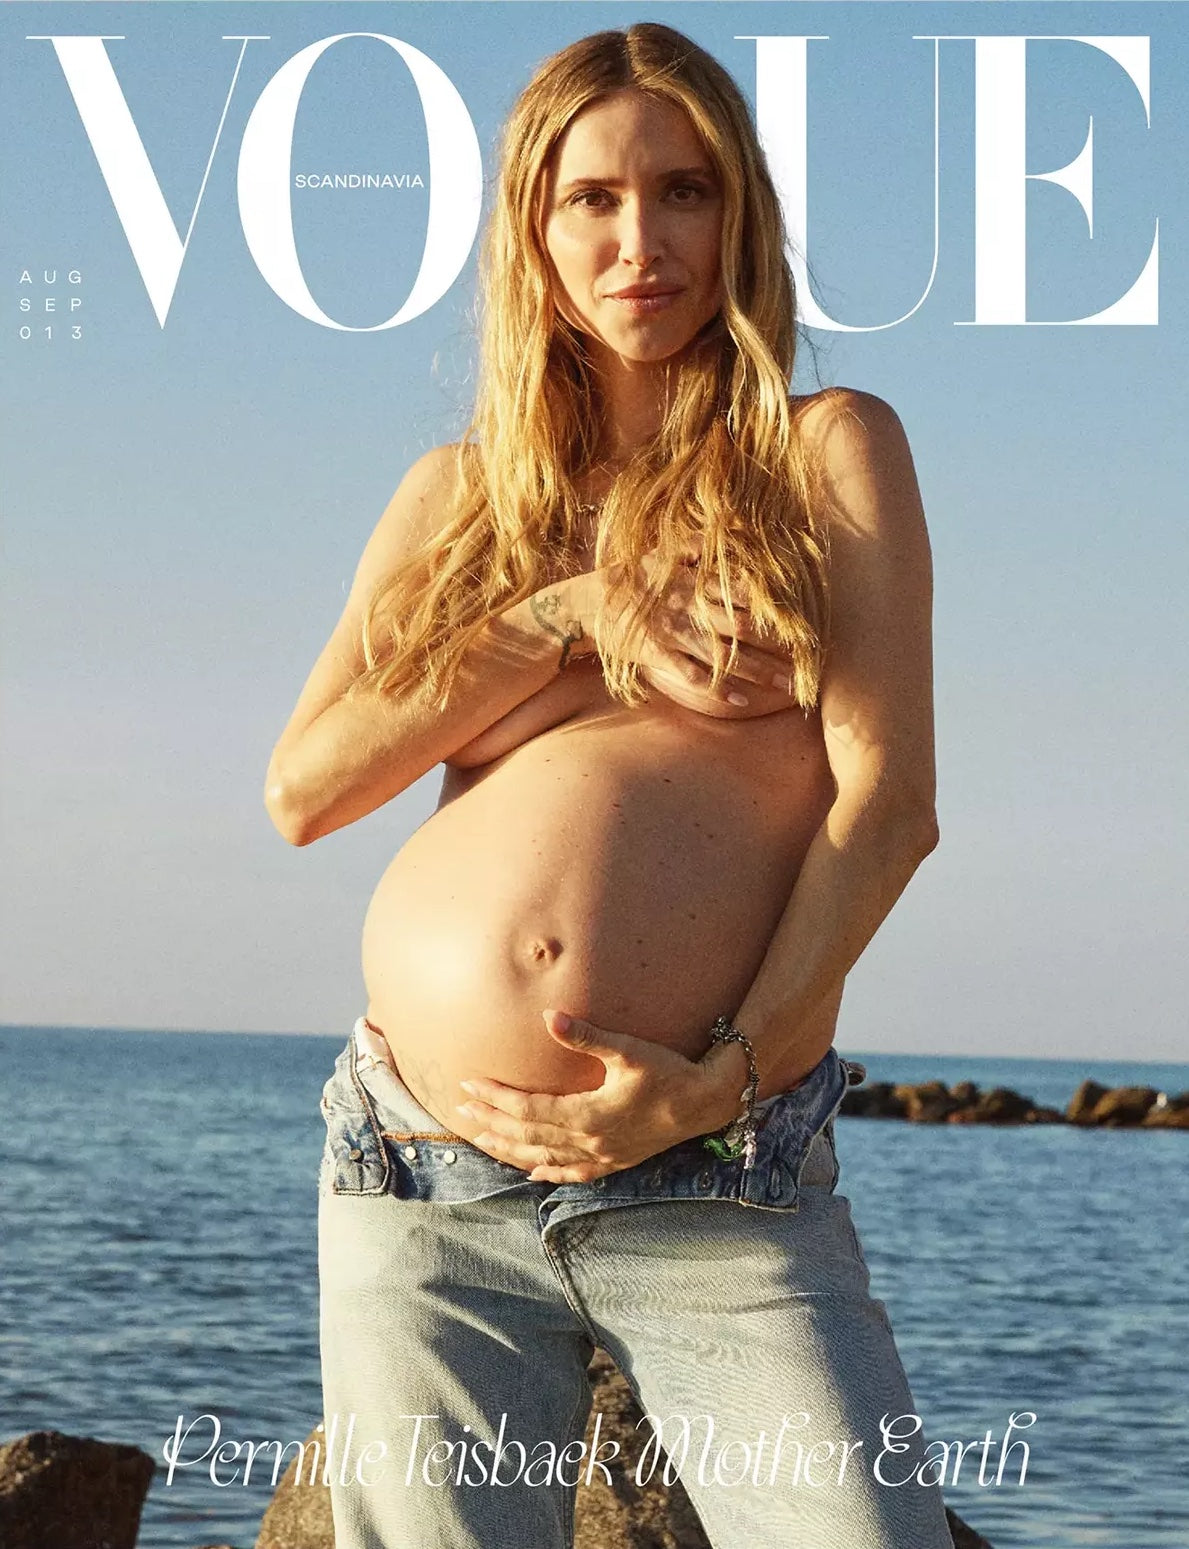 Vogue Scandinavia Issue 13